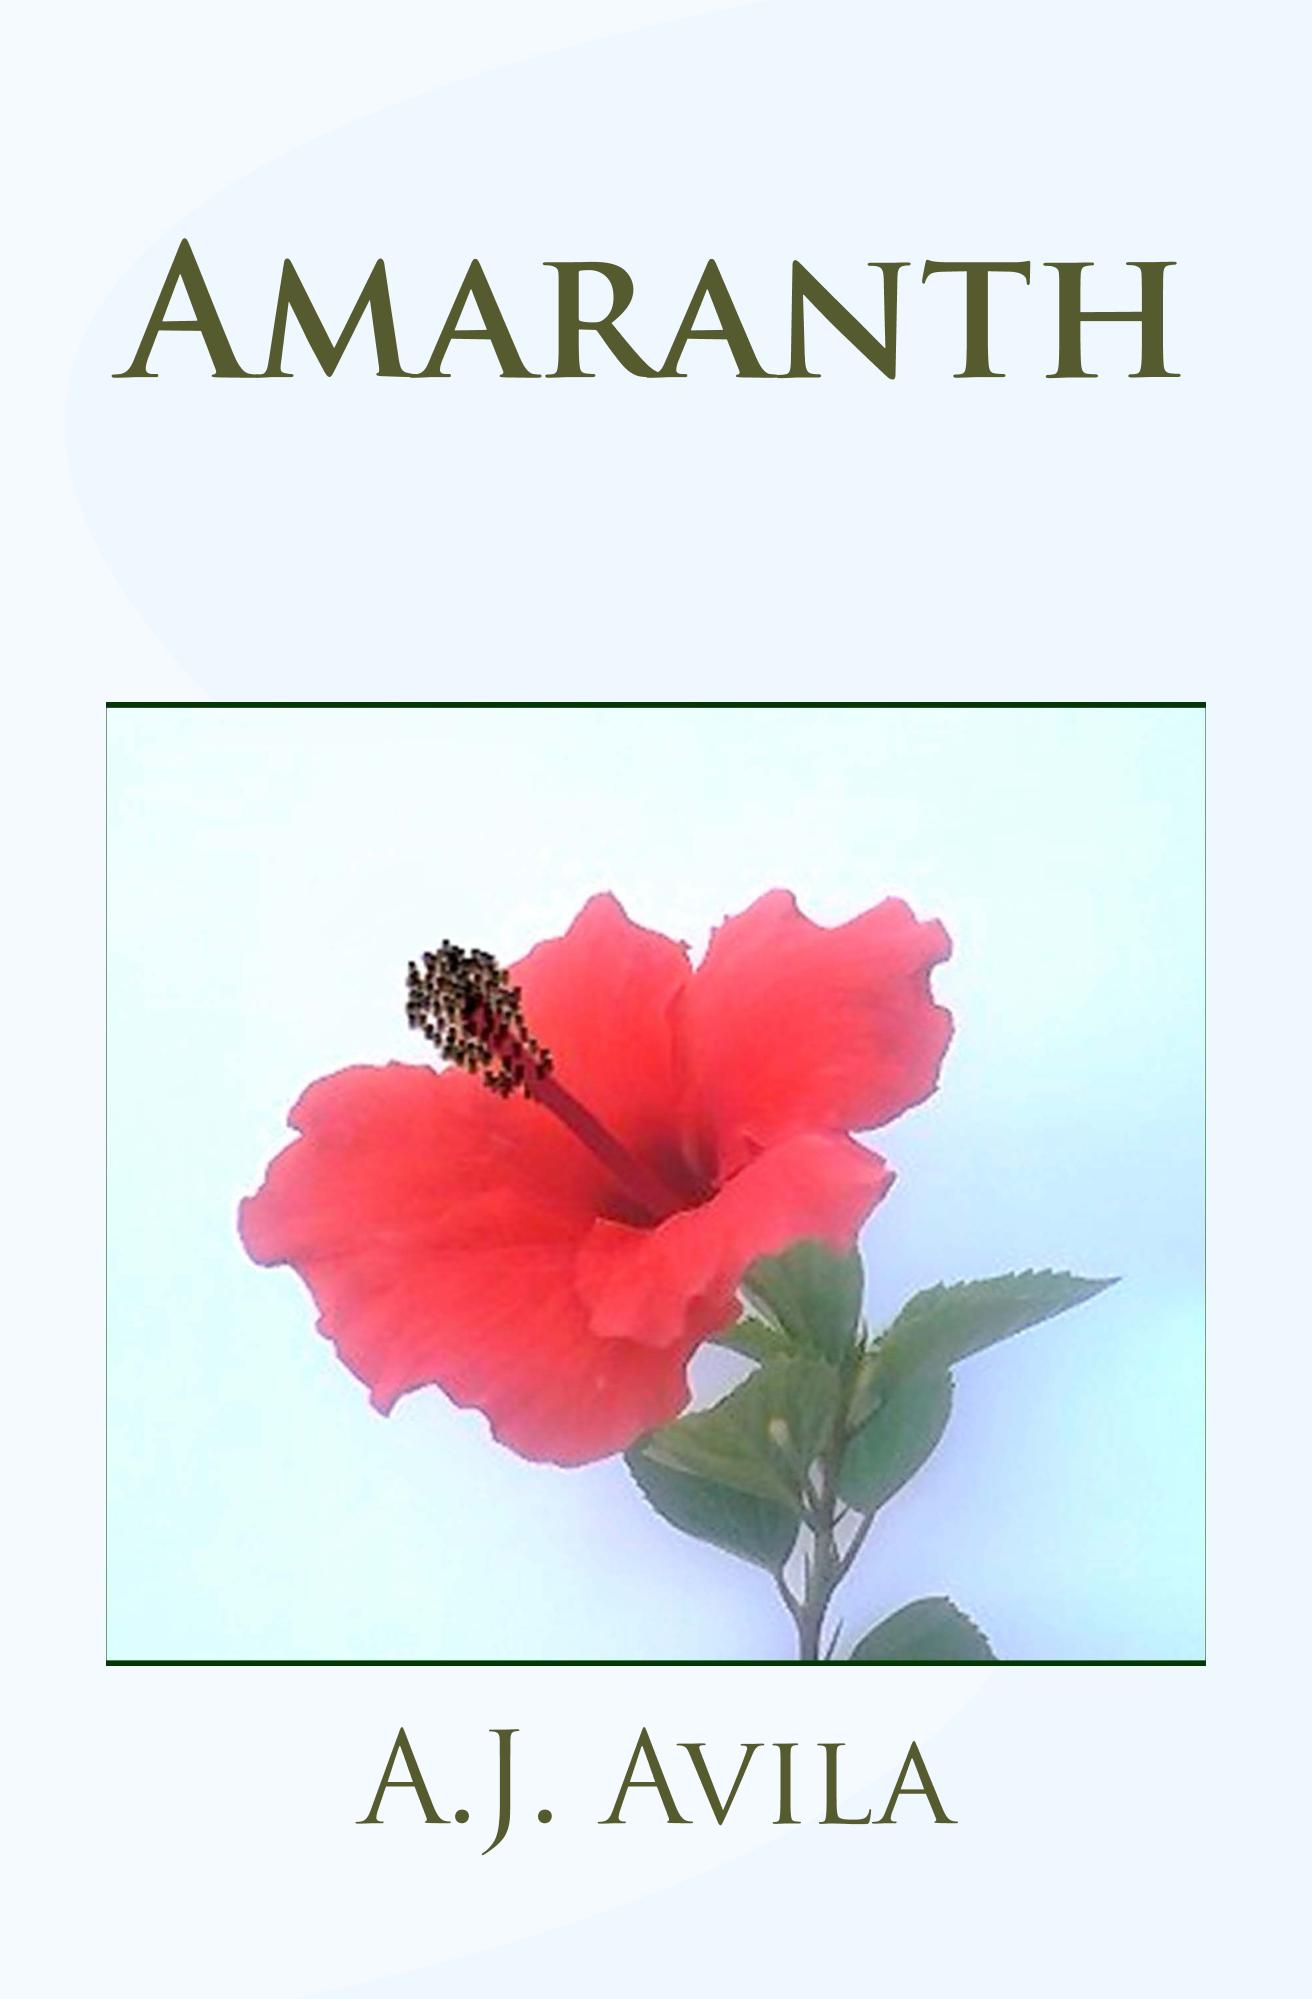 FREE: Amaranth by A.J. Avila